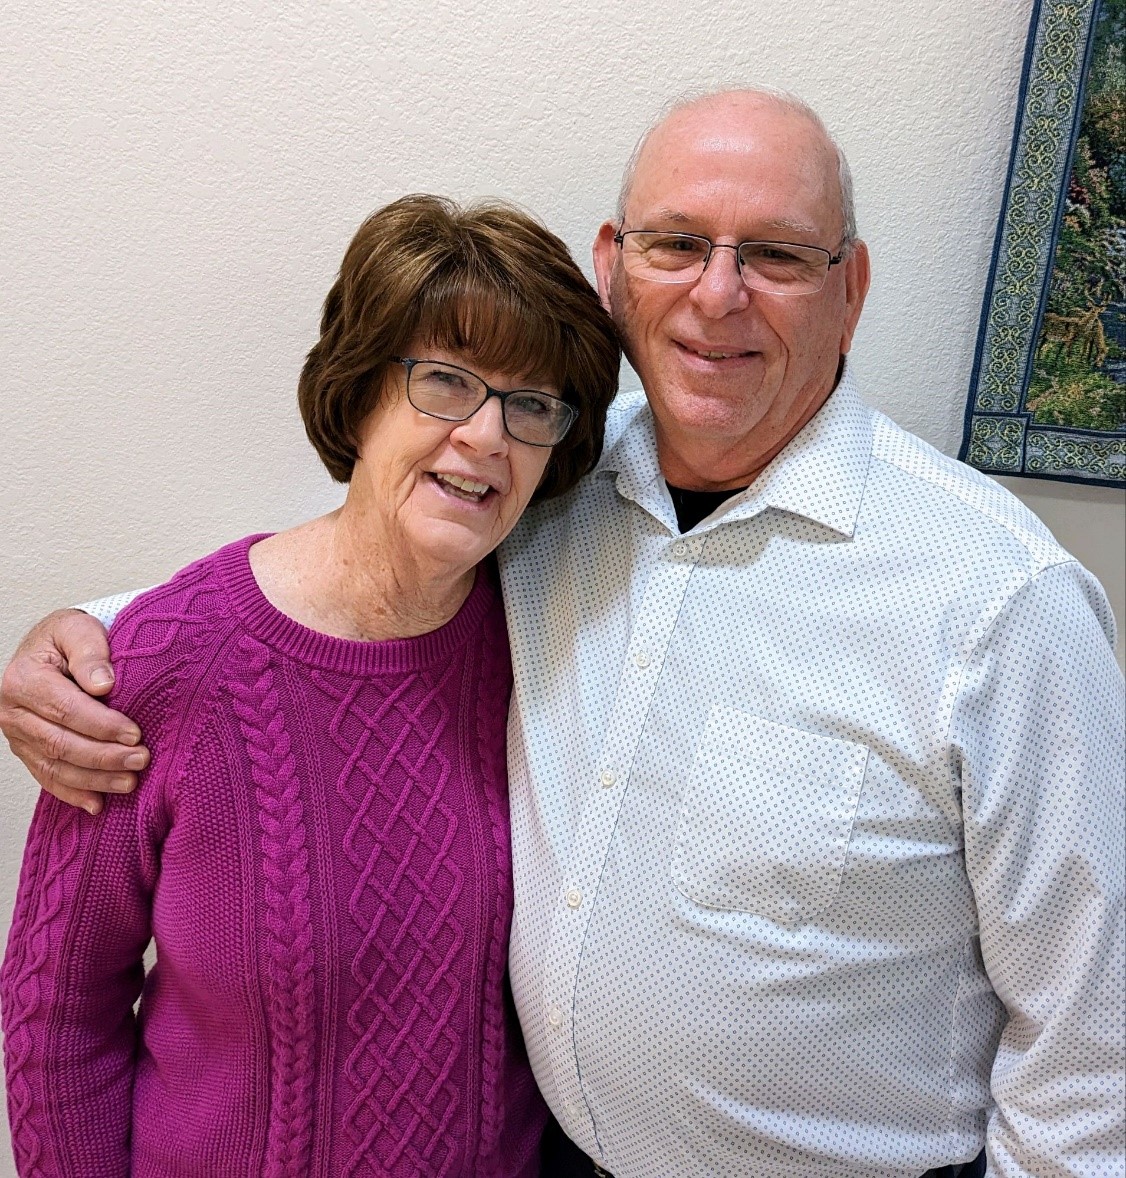 Associate Pastor Ricky and Vickie Townsend – Shepherd's Glory